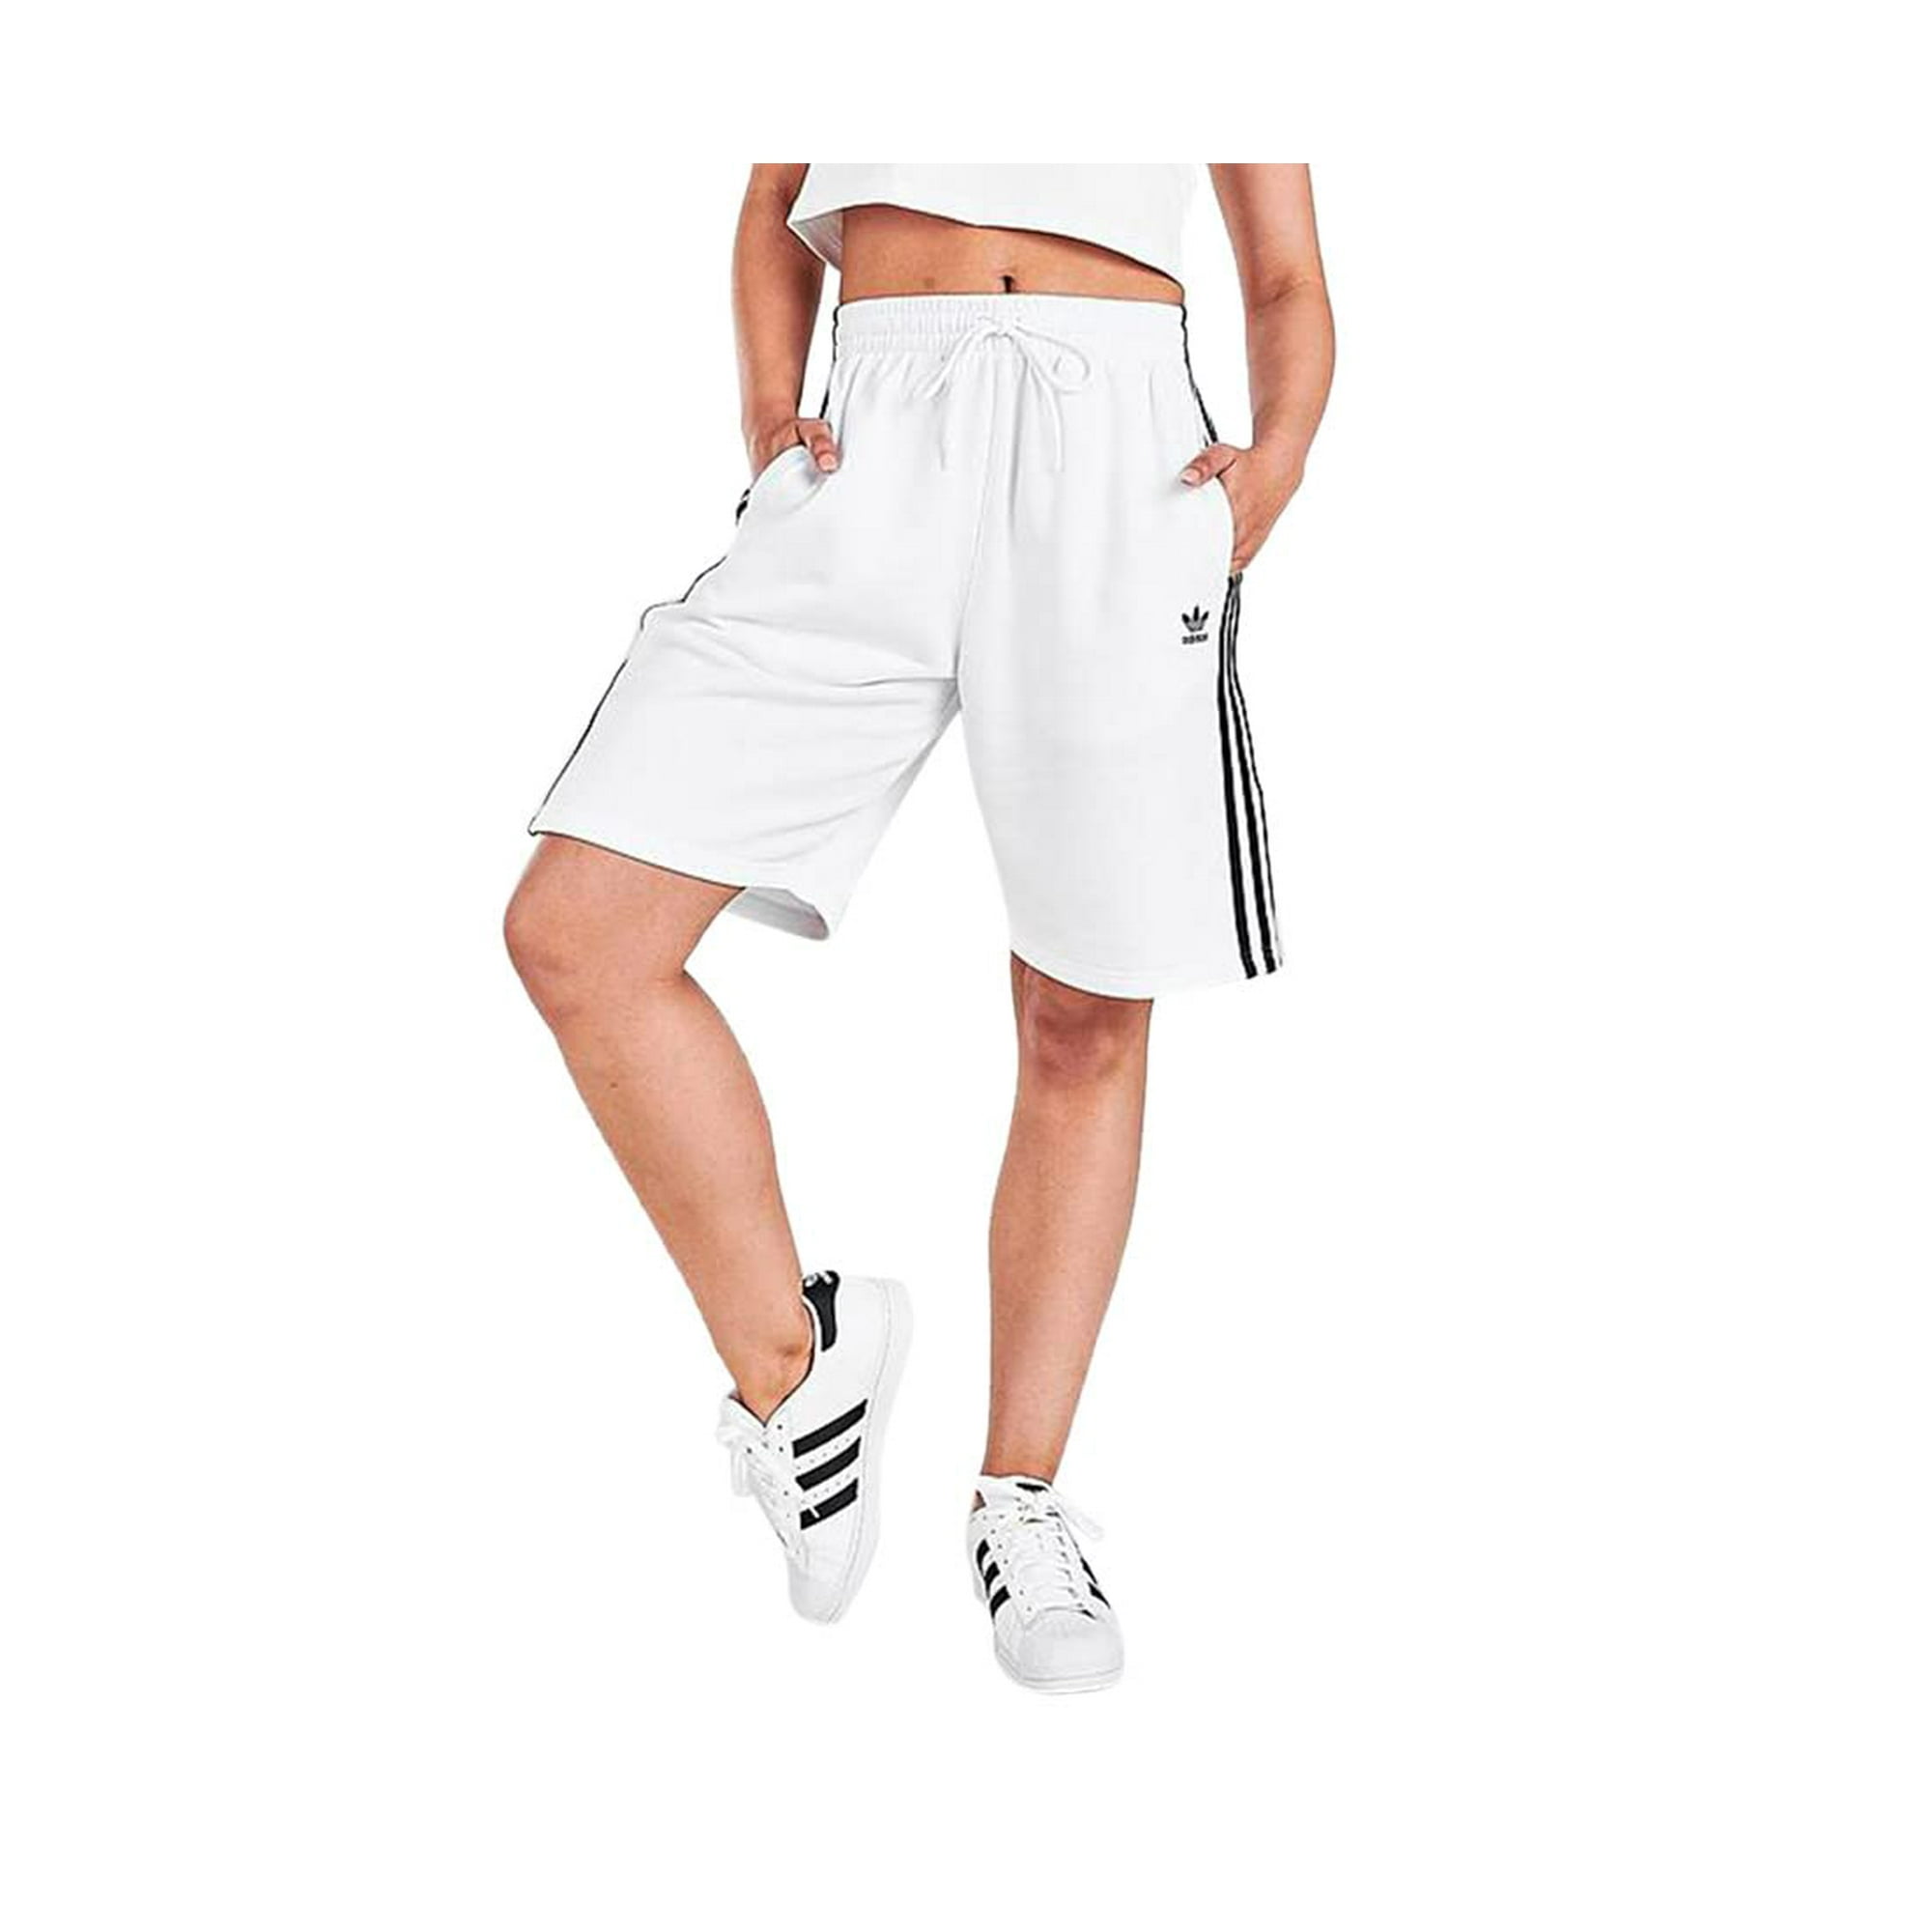 Asistir tortura dos adidas Jogger Short Womens Active Shorts Size M, Color: White/Black |  Walmart Canada